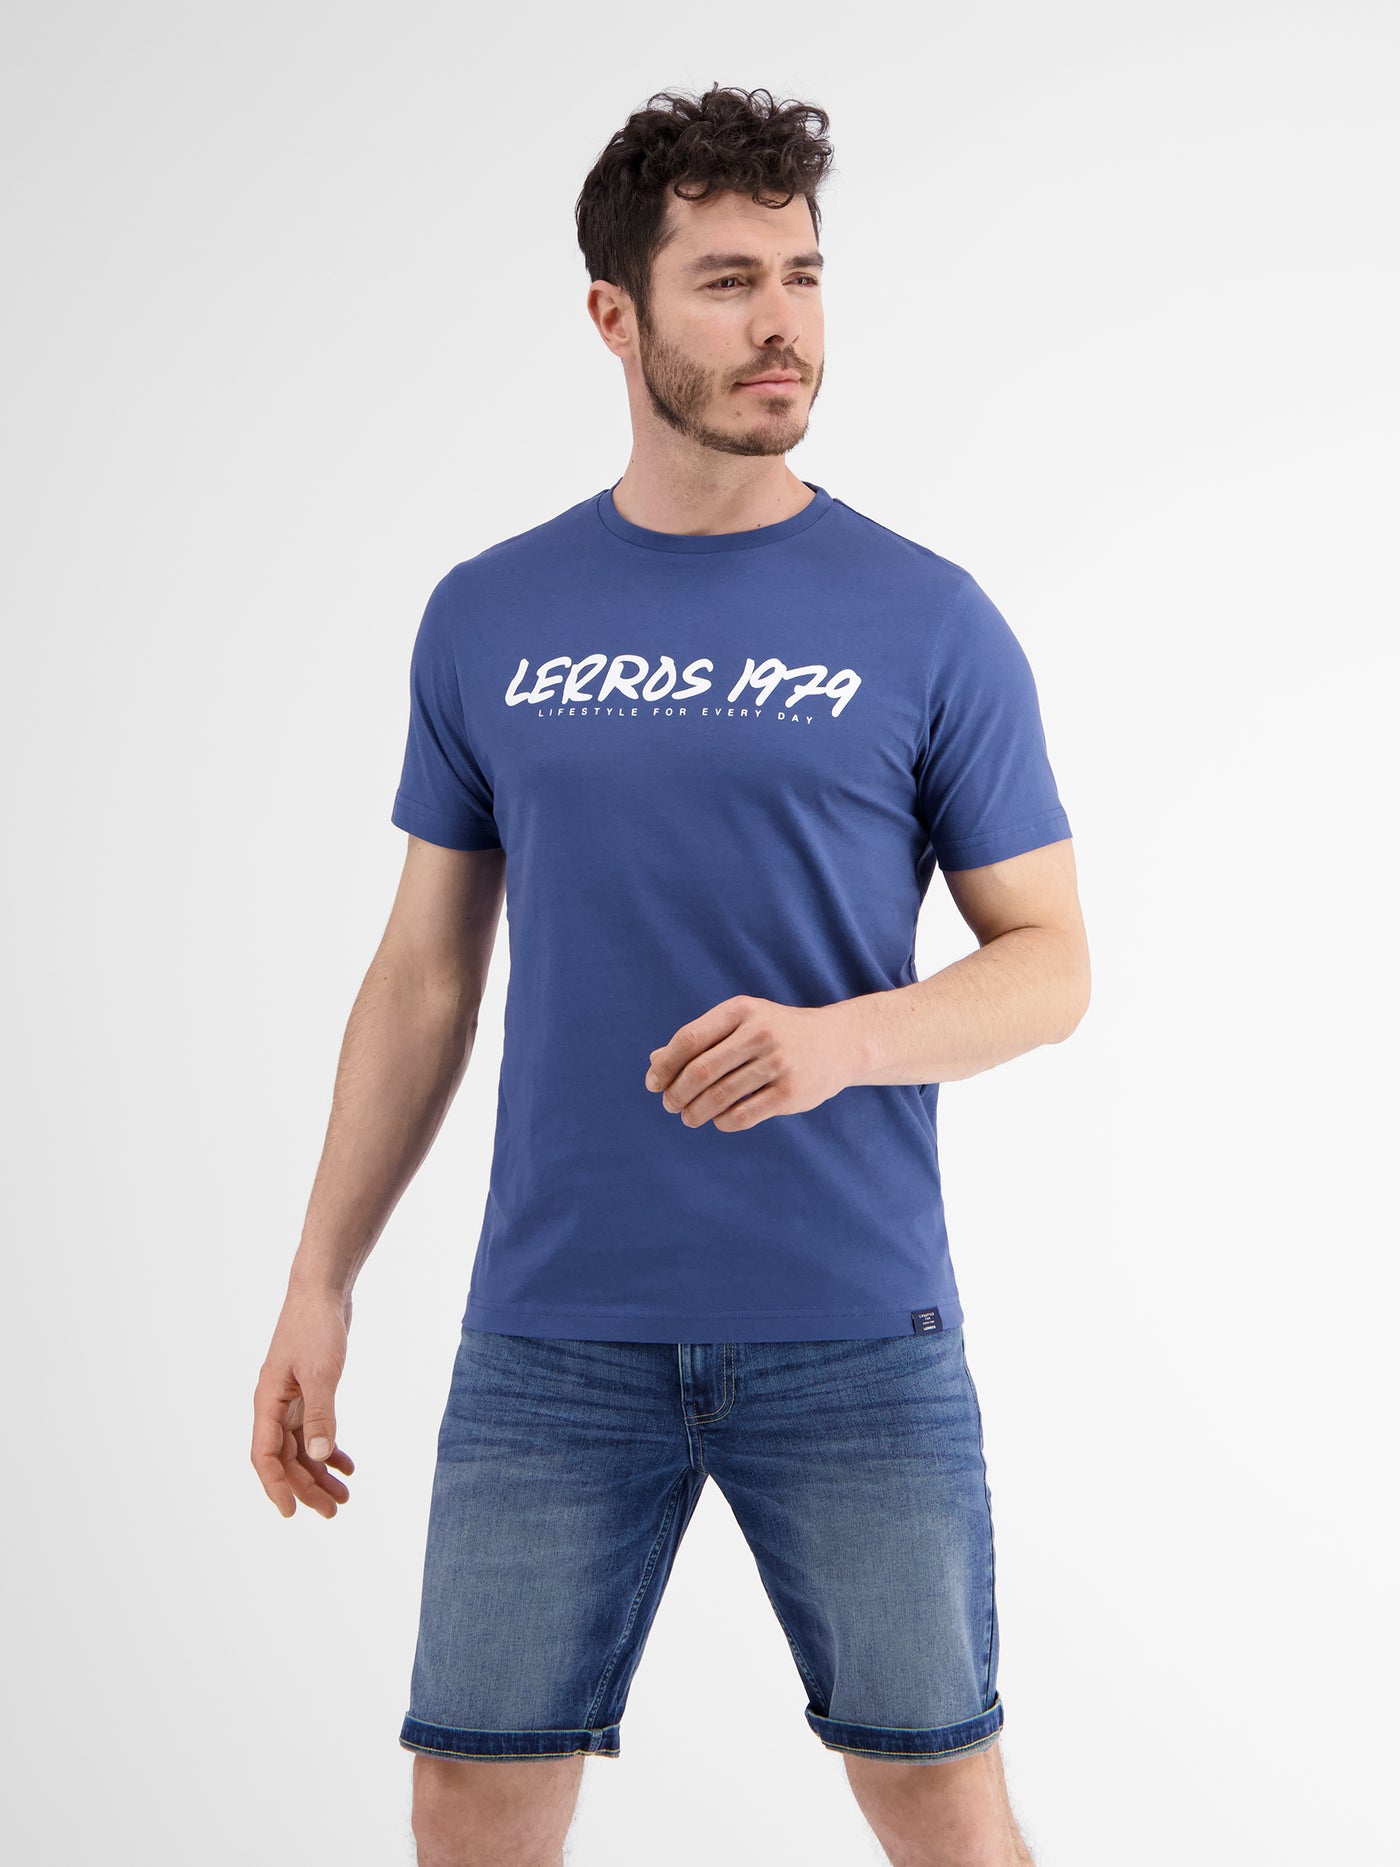 T-Shirt – LERROS 1979* SHOP *LERROS